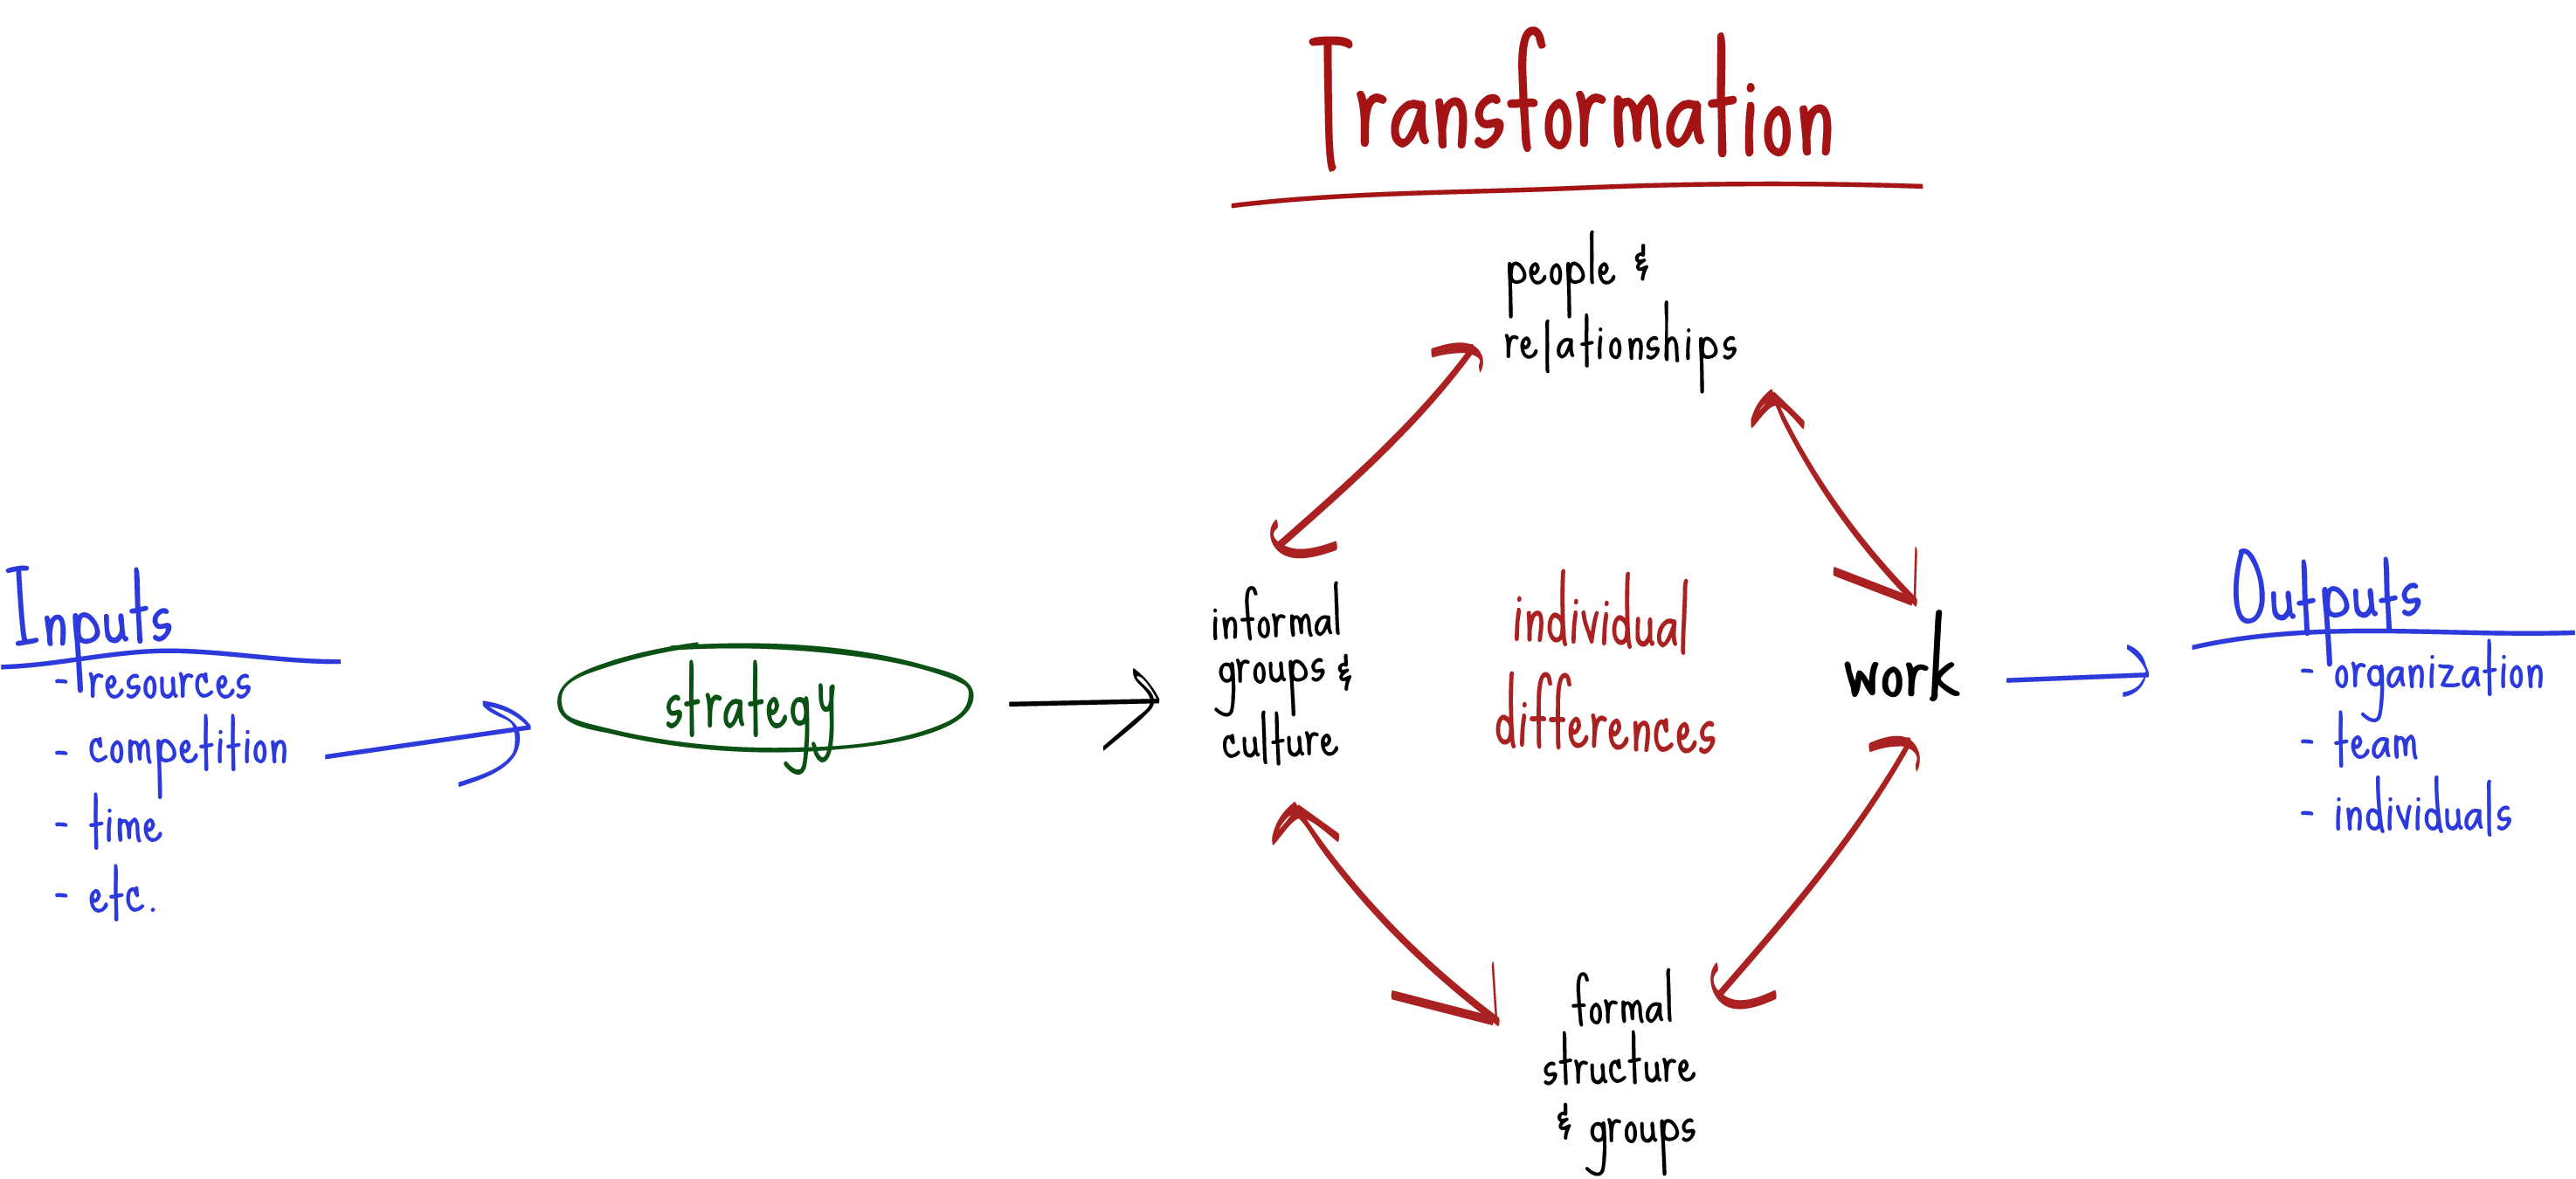 A diagram of organizational transformation concepts.